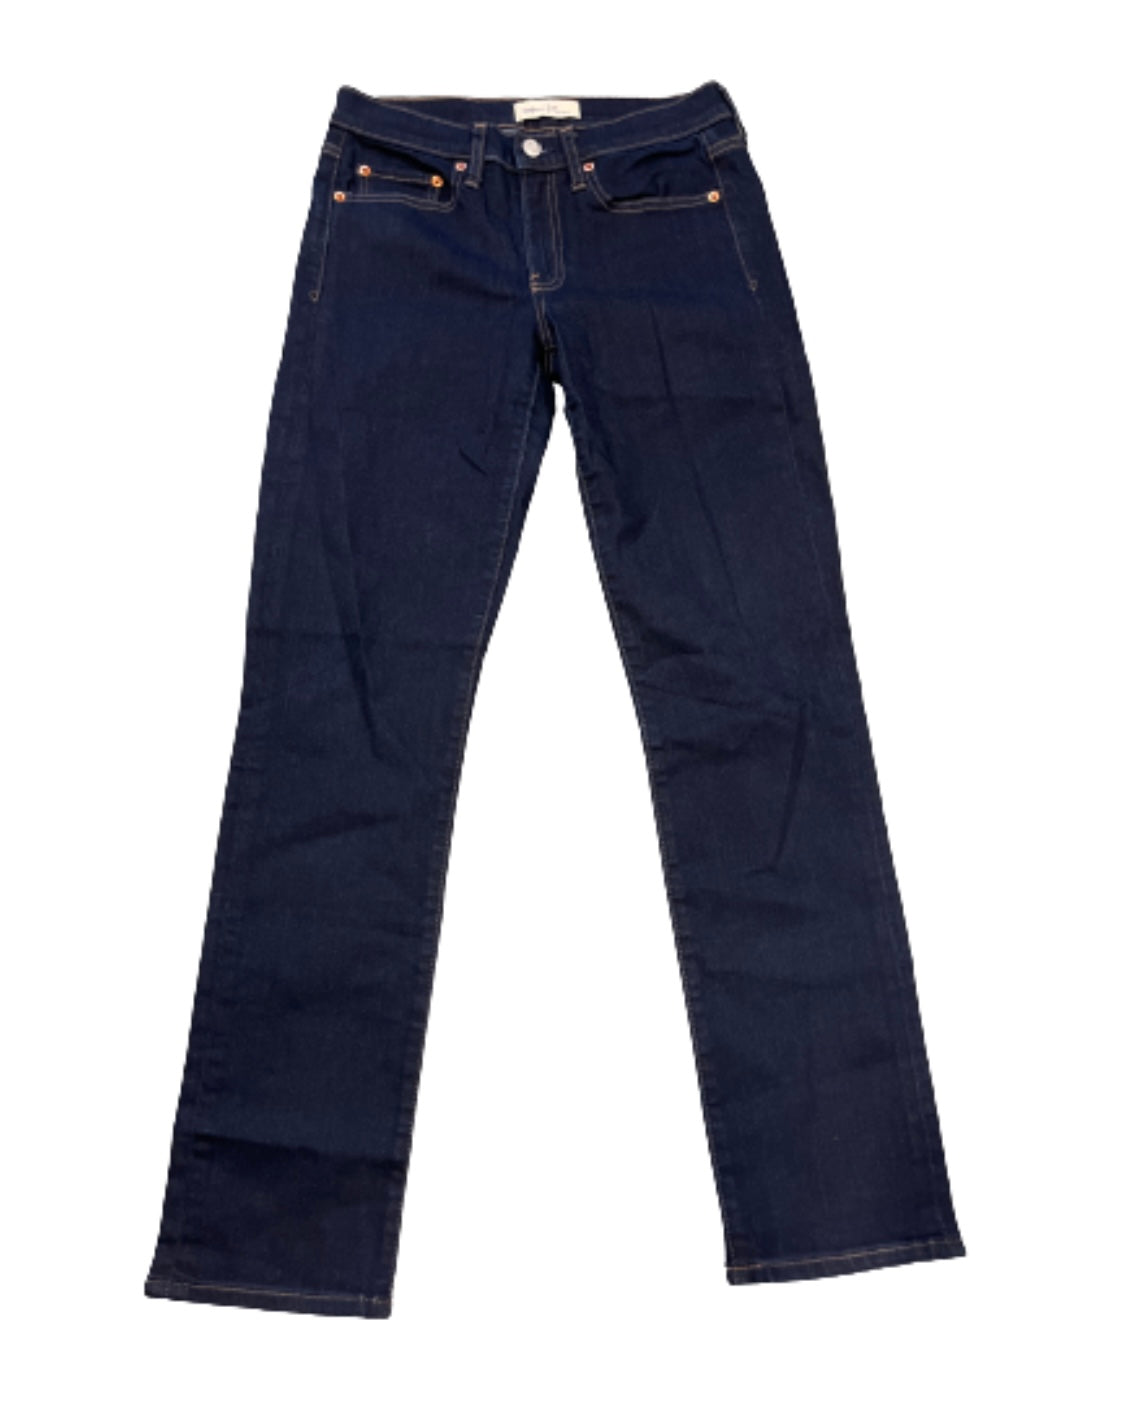 BONES: Dr. Brennan's GAP Fitted Jeans (28)